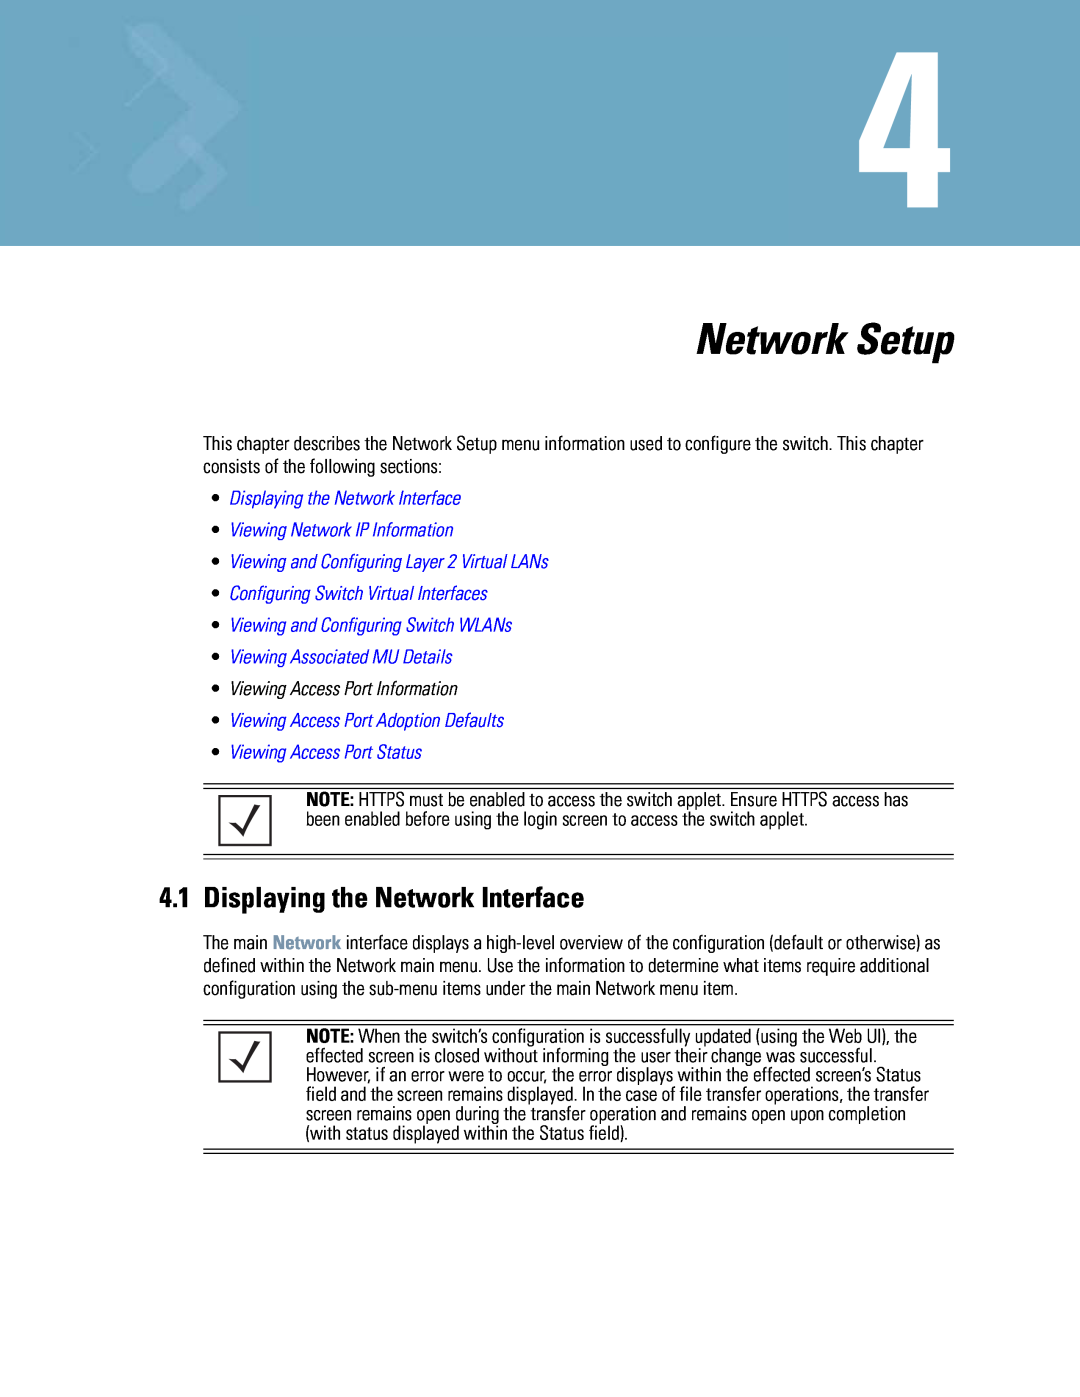 Motorola WS5100 manual Network Setup, Displaying the Network Interface, •Viewing Network IP Information 